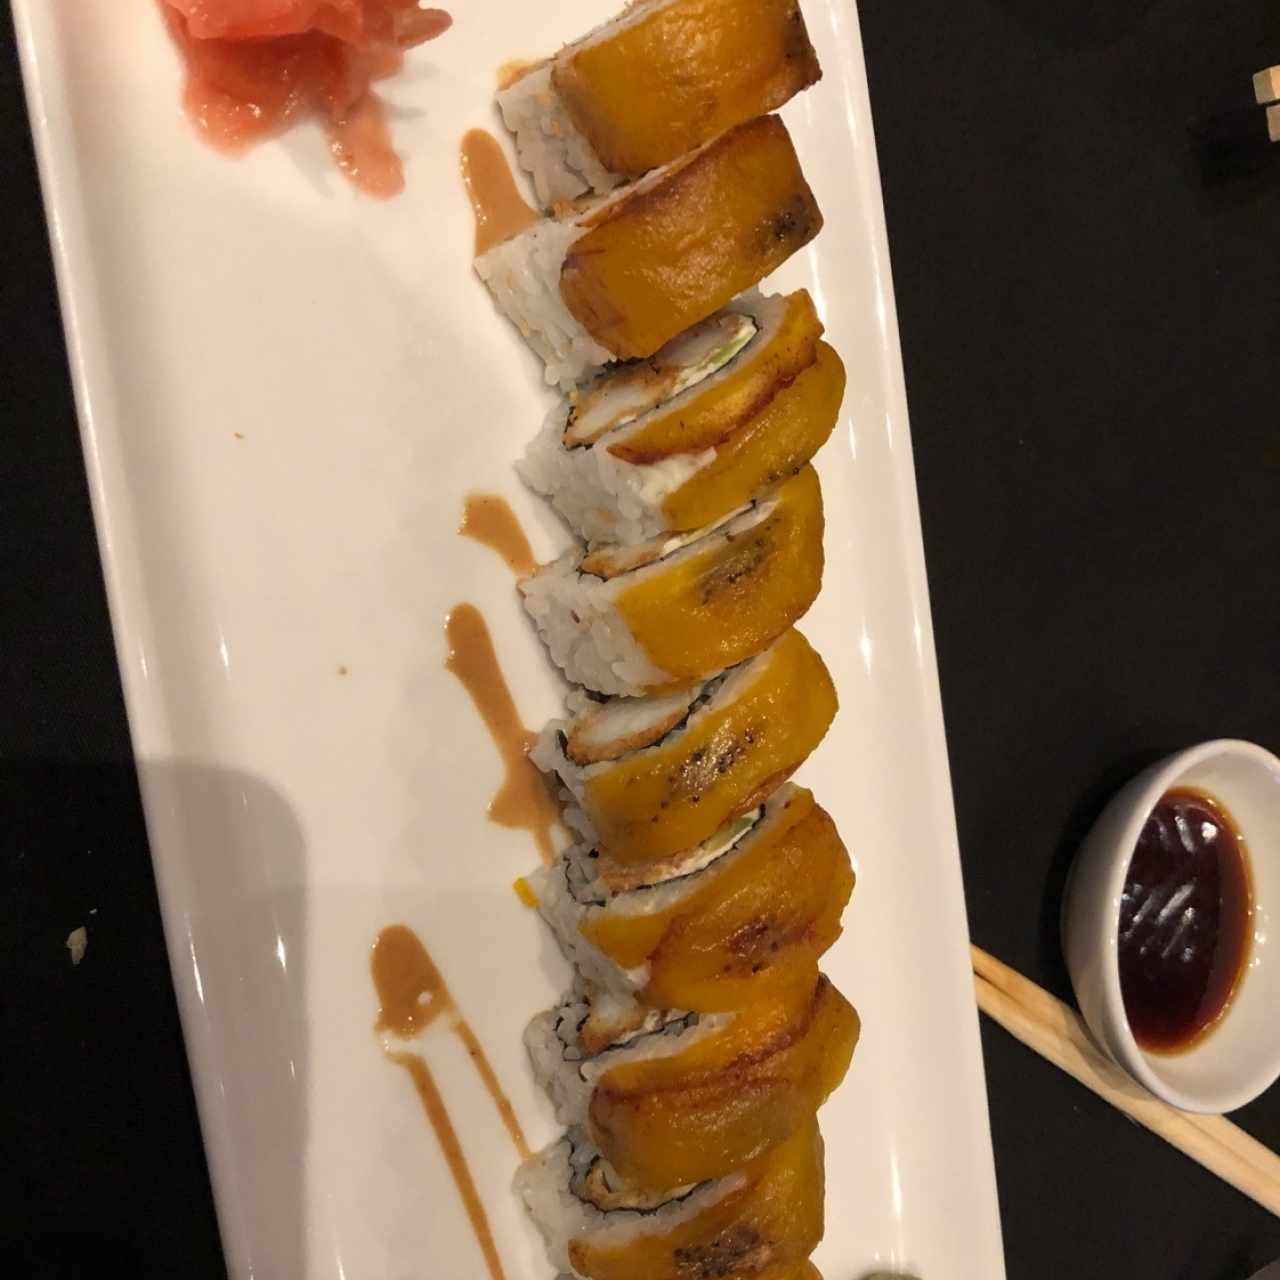 Sushi rolls/Makis - Osaka ebi